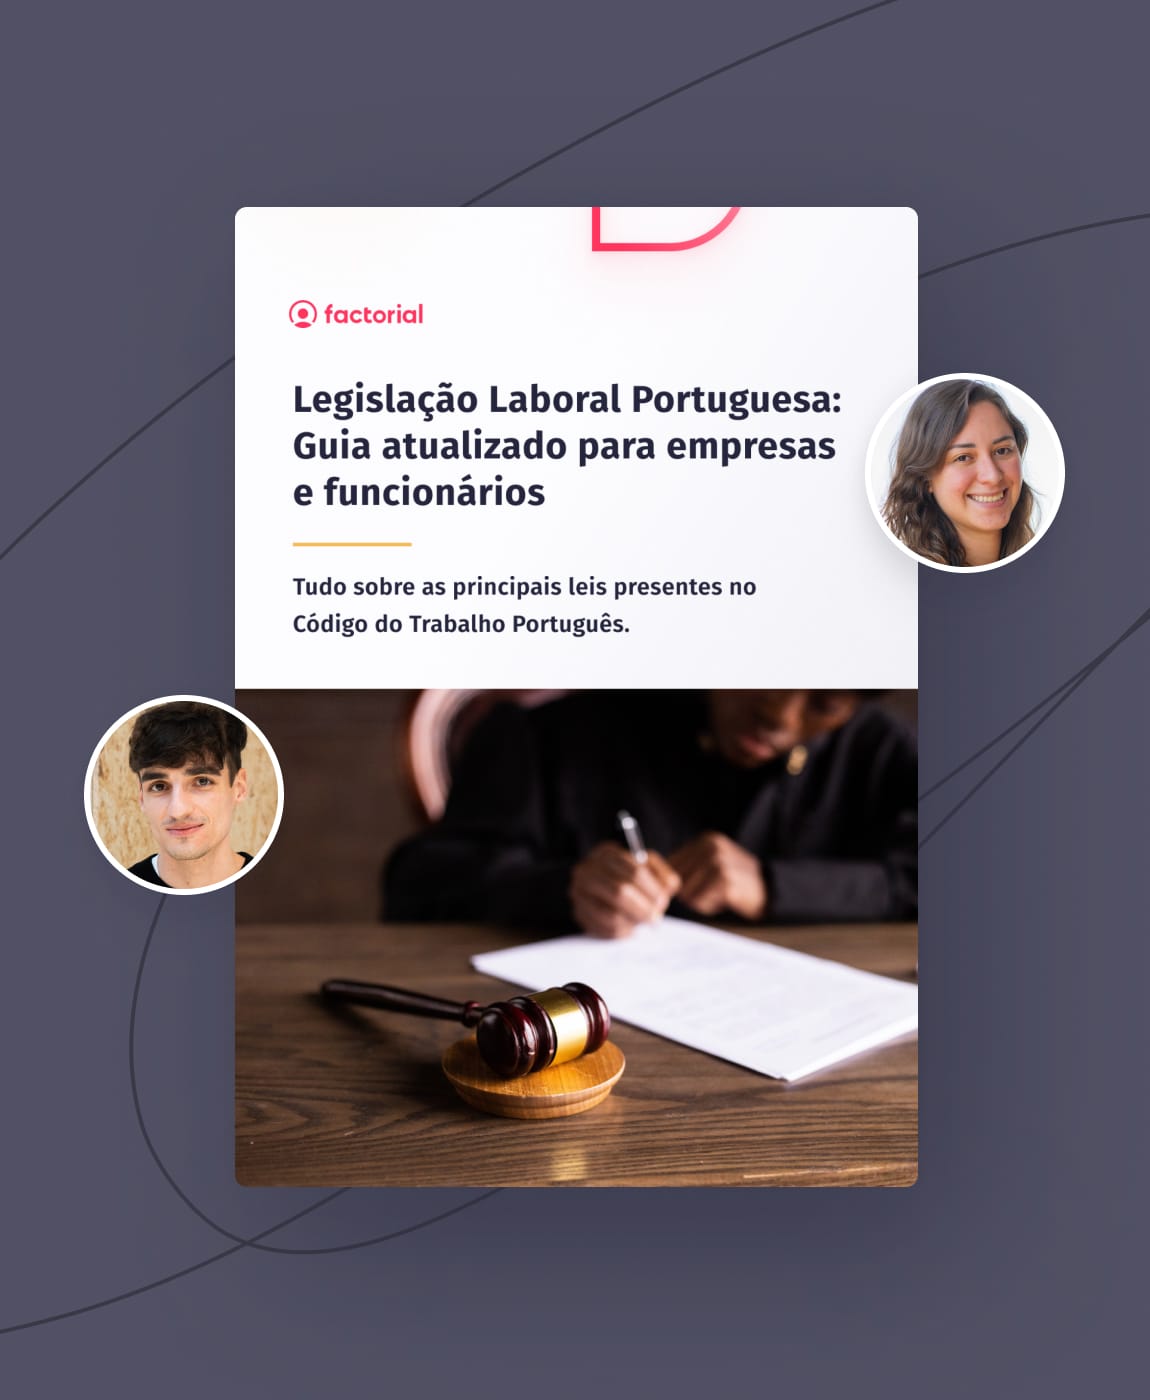 sobre a Legislação Laboral Portuguesa